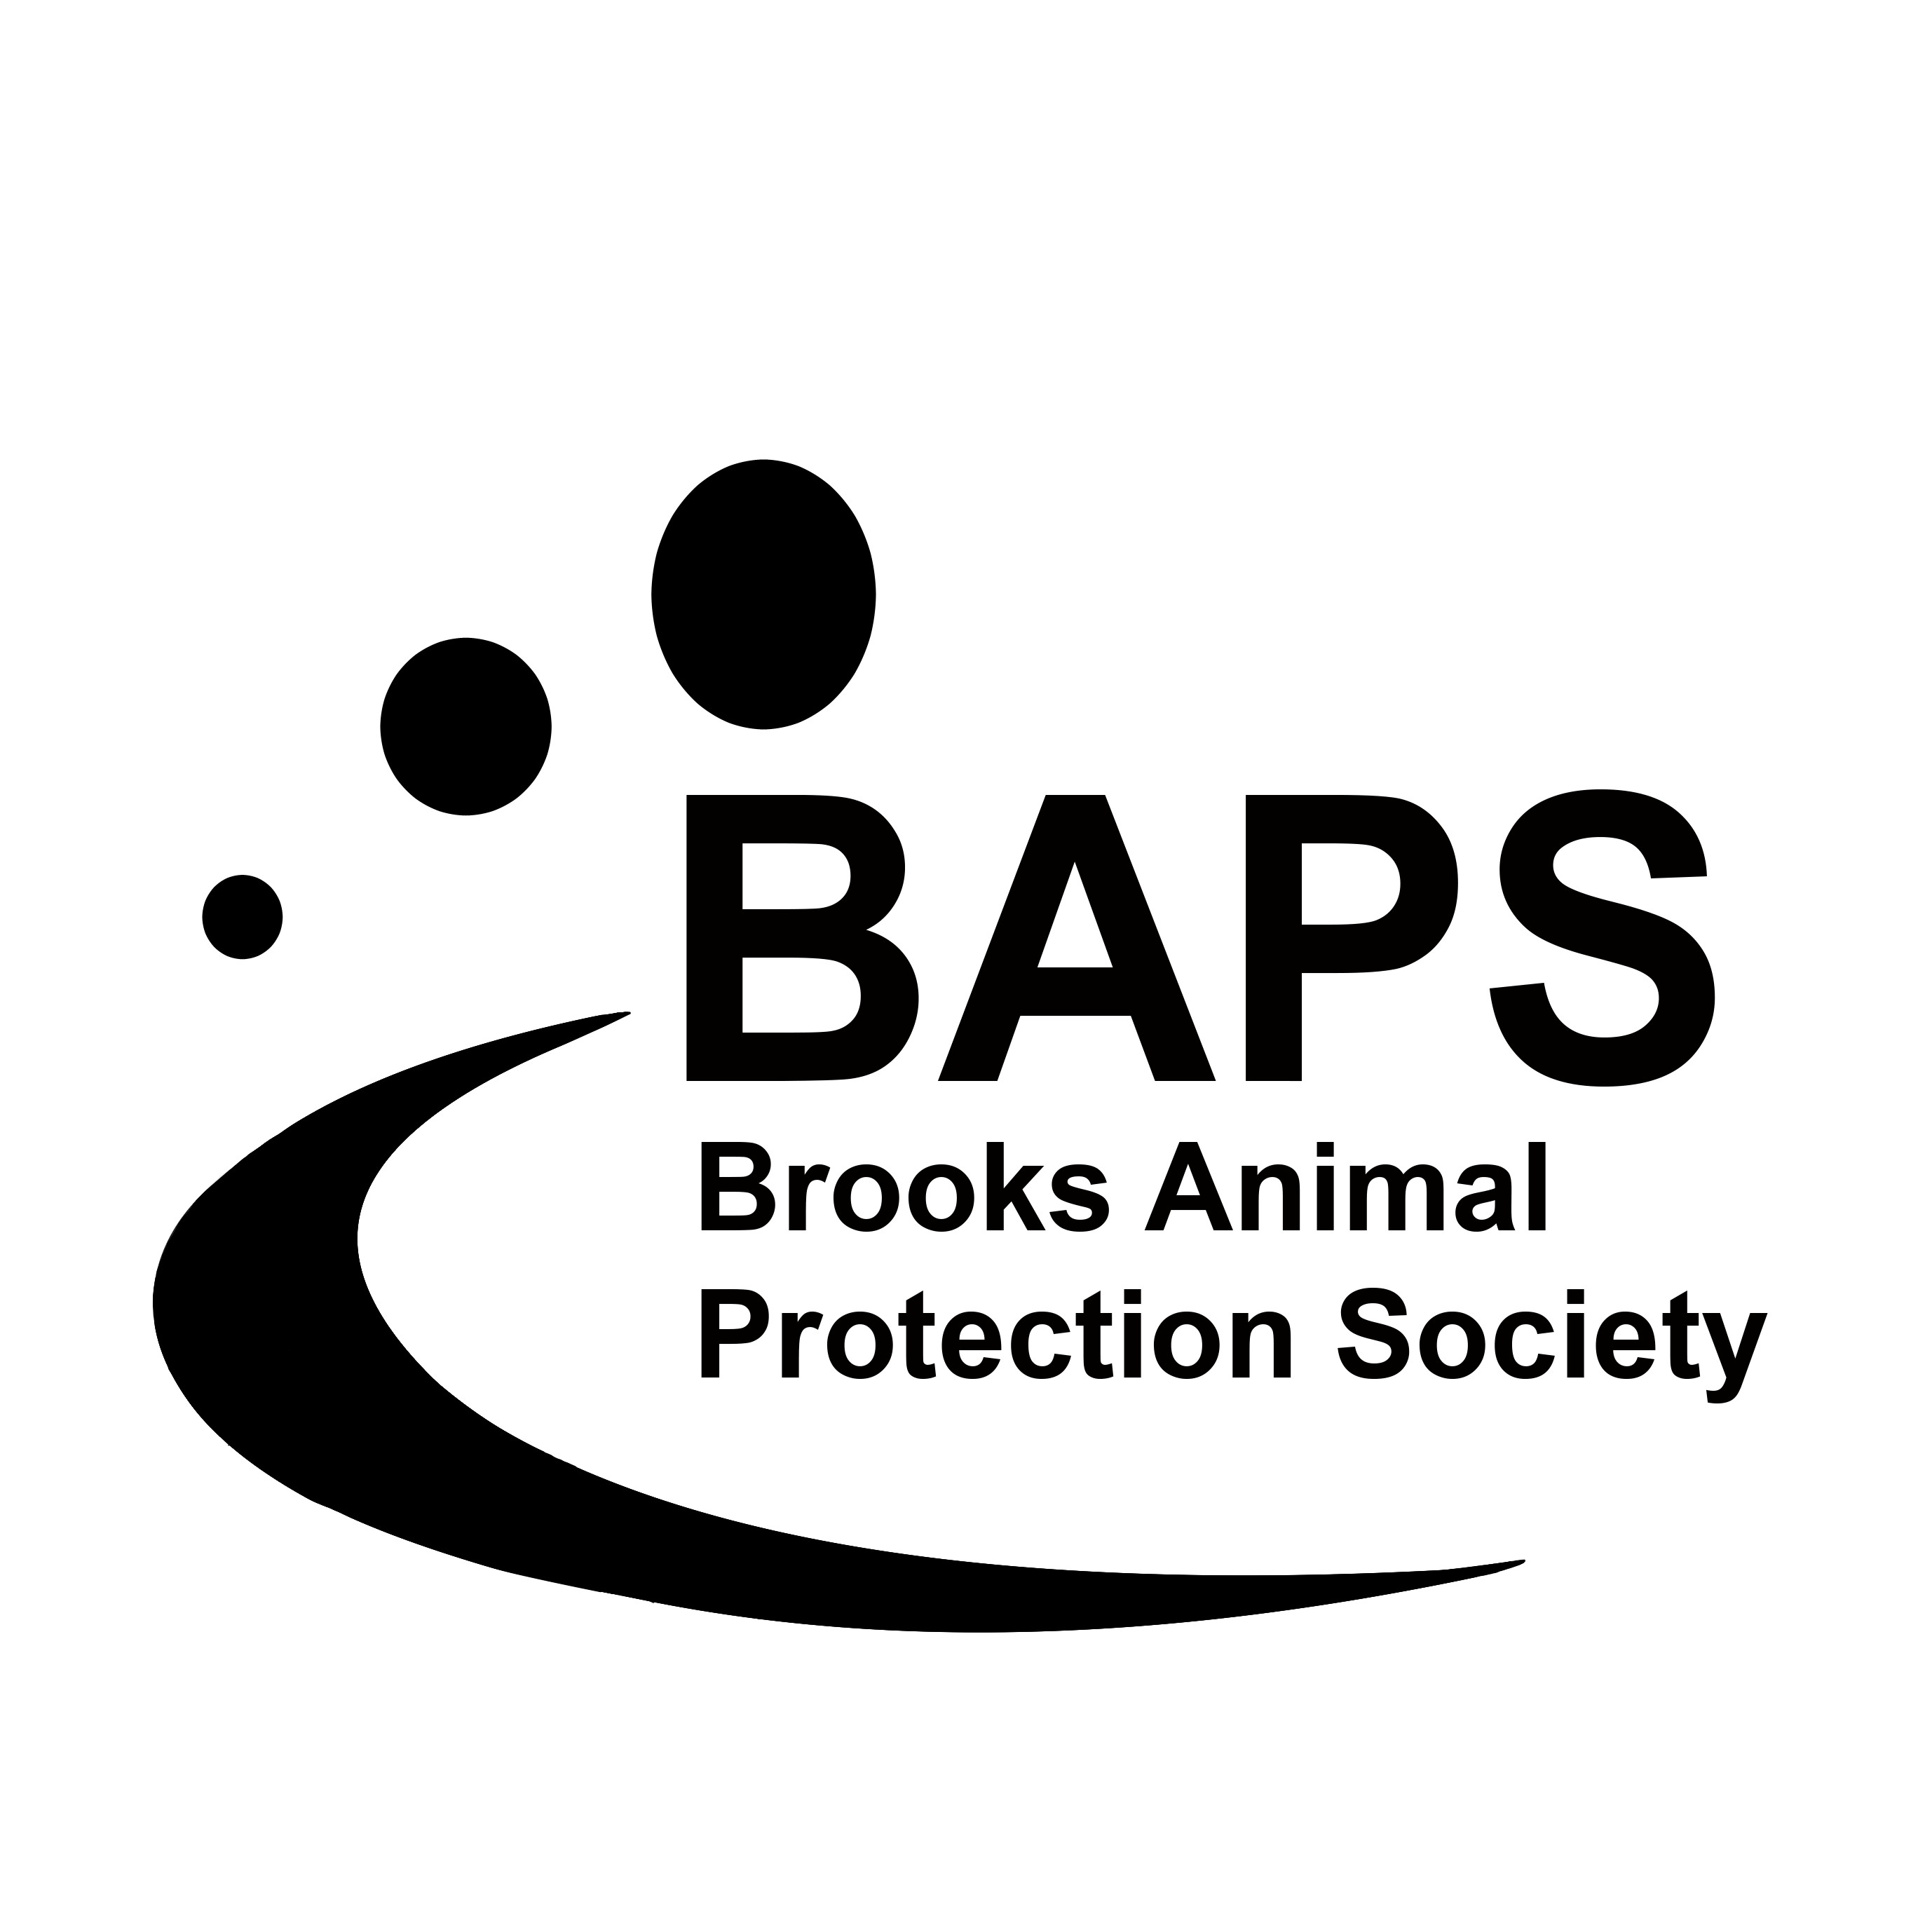 Brooks Animal Protection Society